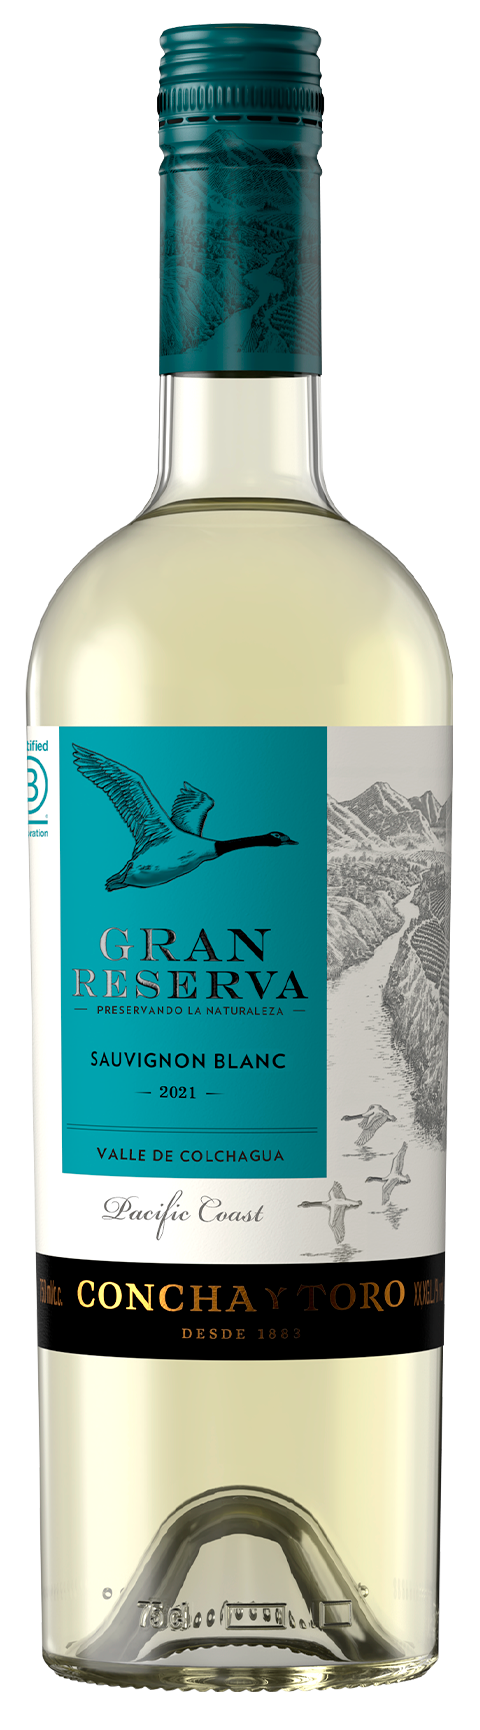 Conchay Toro Grand Reserva Sauvignon Blanc- bk wine depott corp